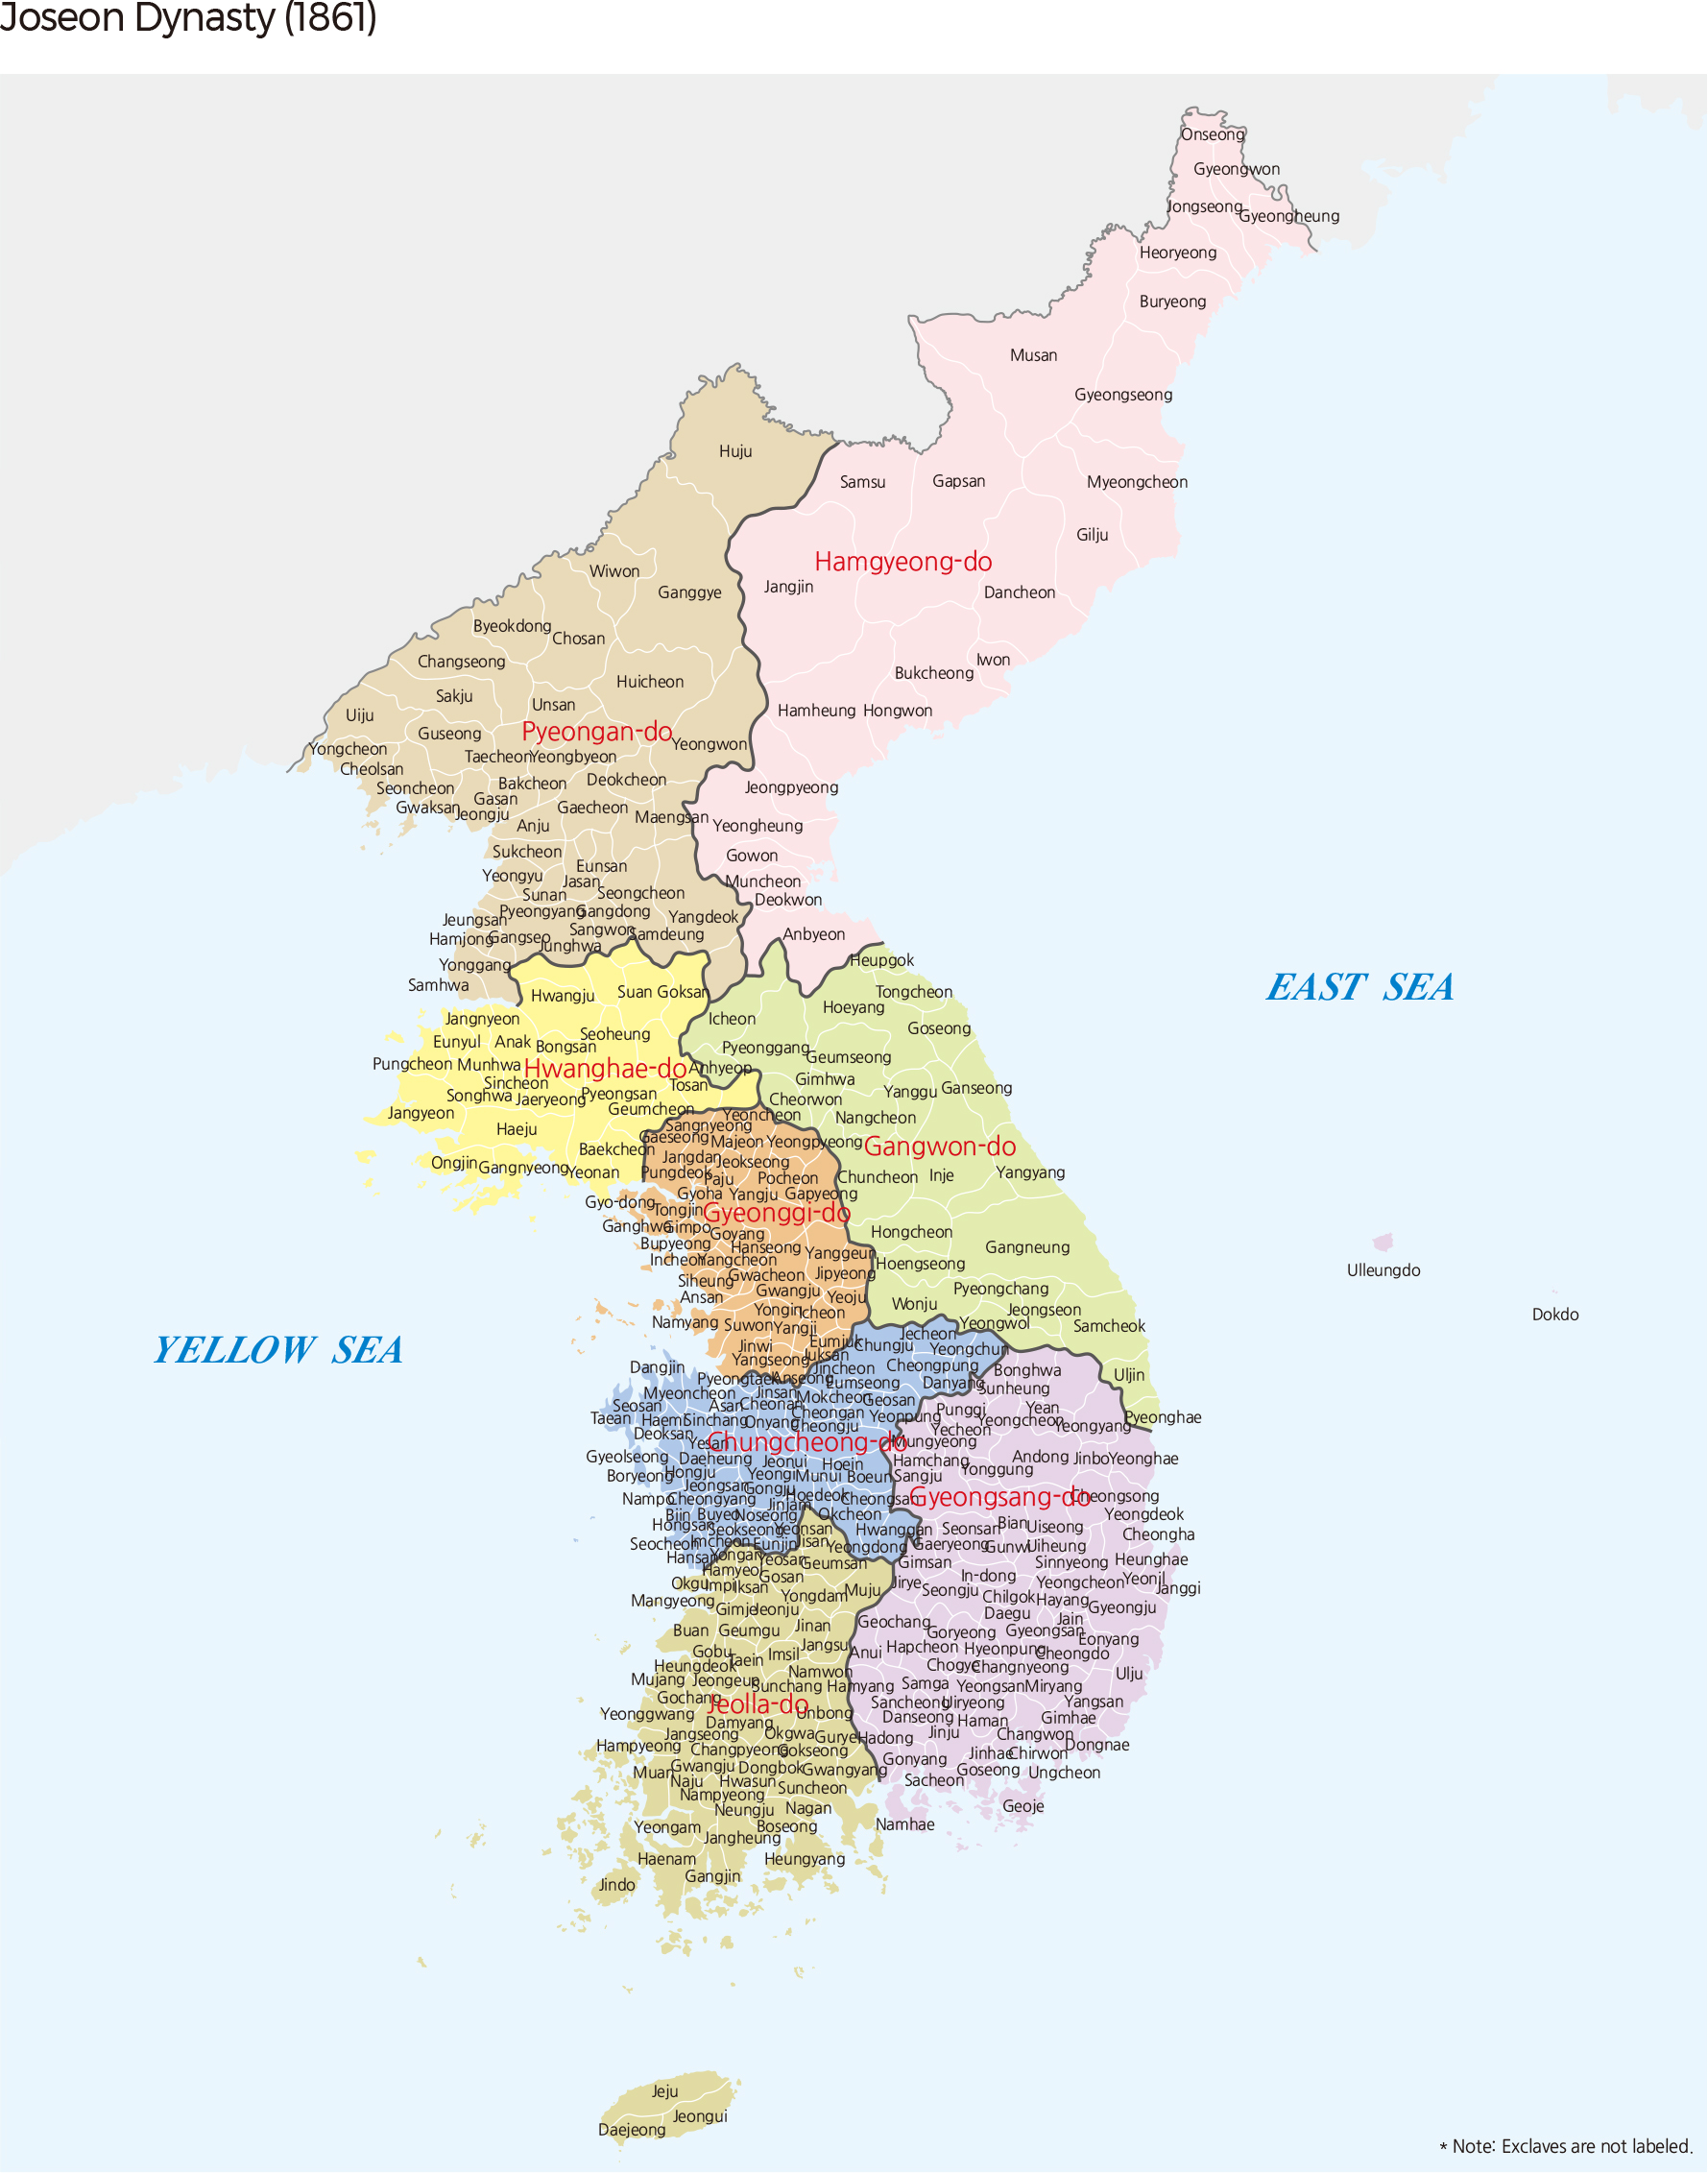 Joseon Dynasty (1861)